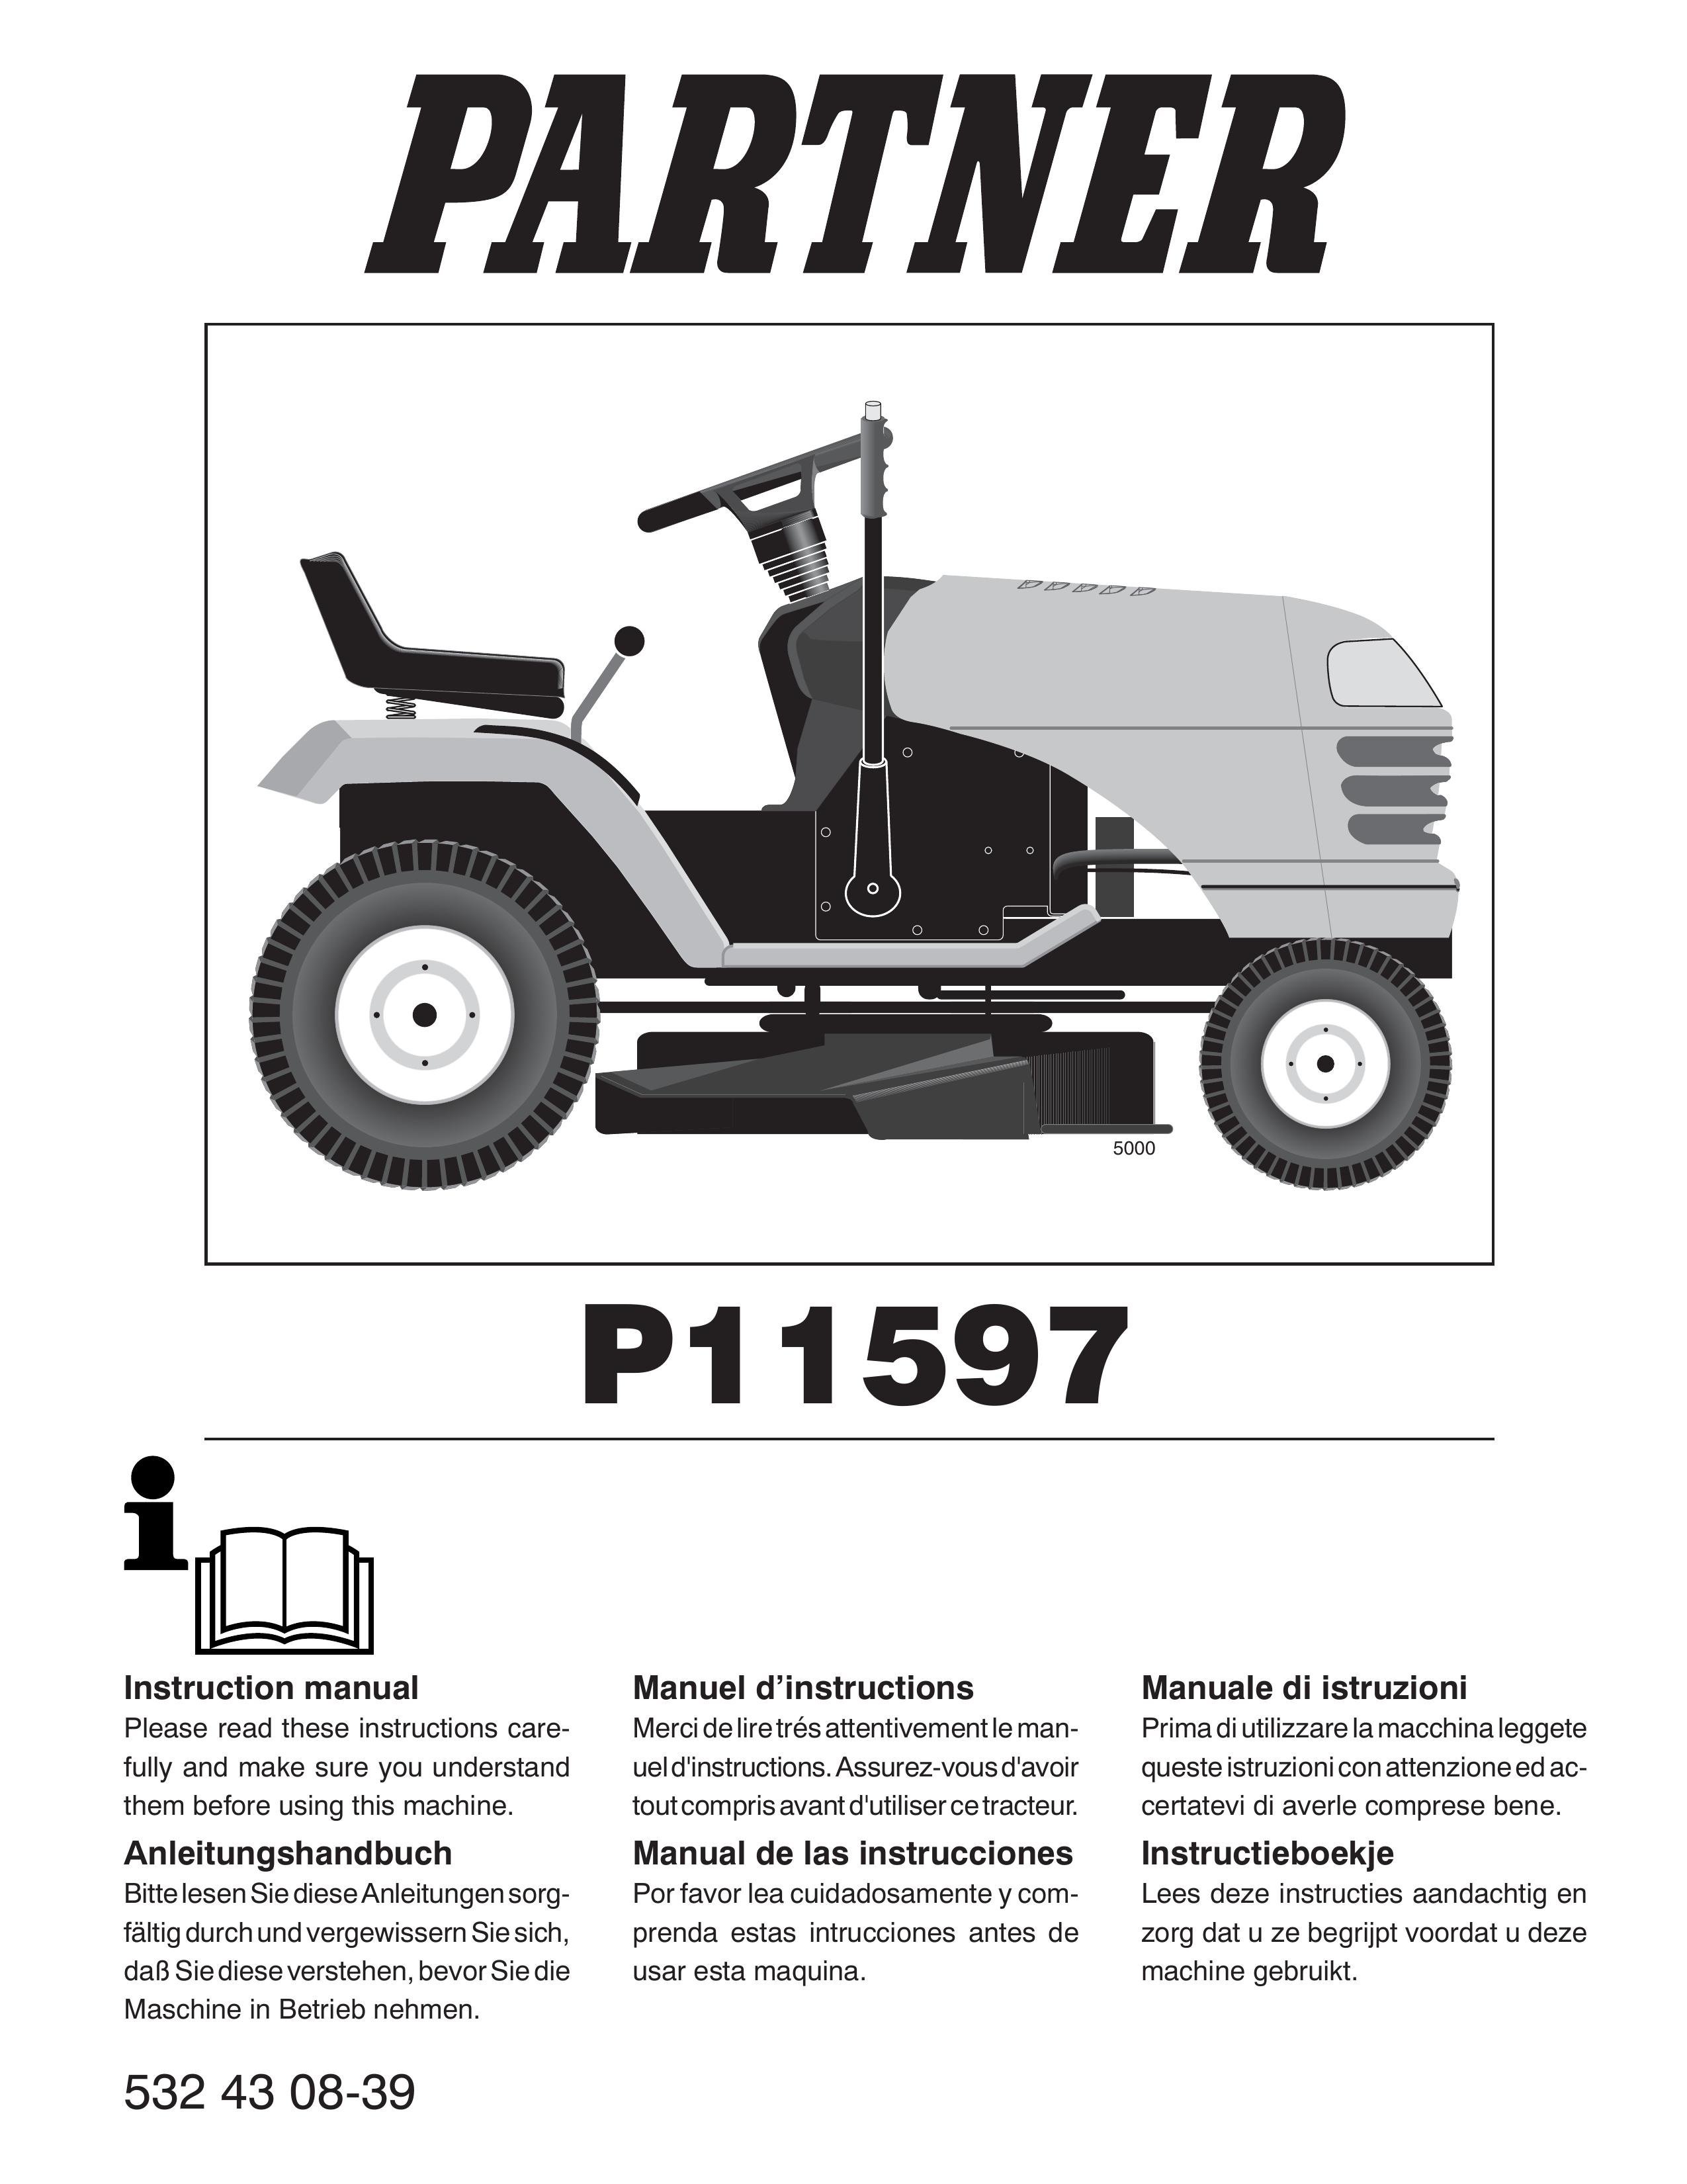 Partner Tech P11597 Lawn Mower User Manual